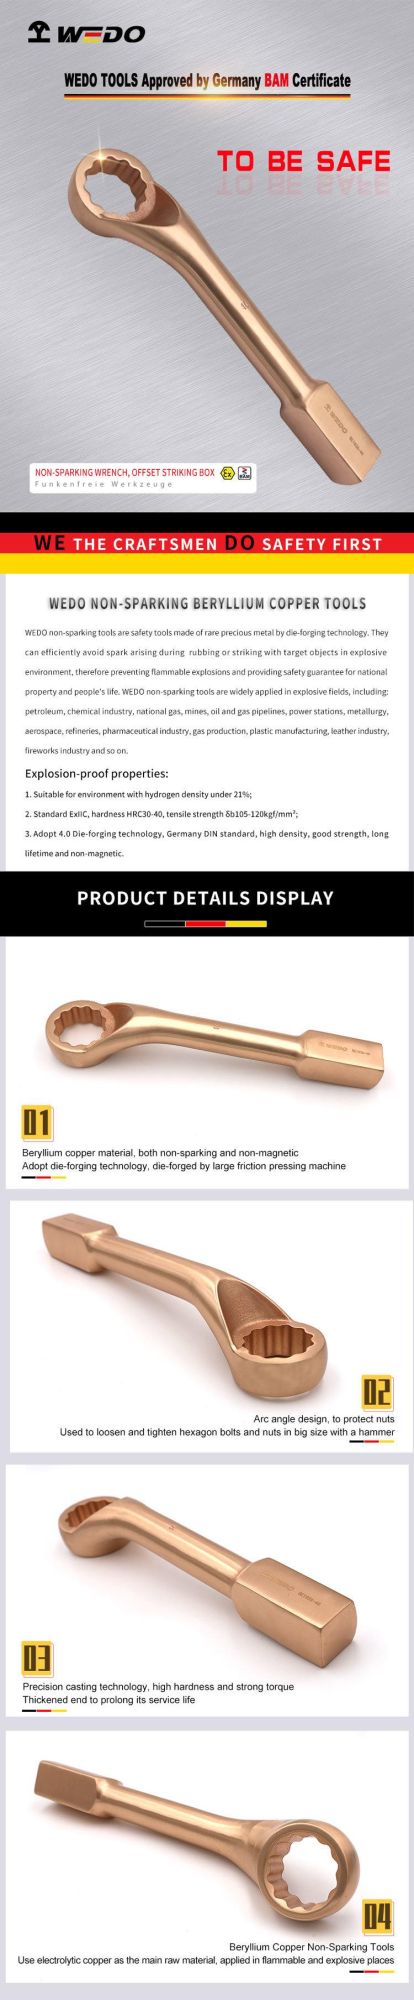 Wedo Beryllium Copper Alloy Non Sparking Offset Slogging Box Wrench